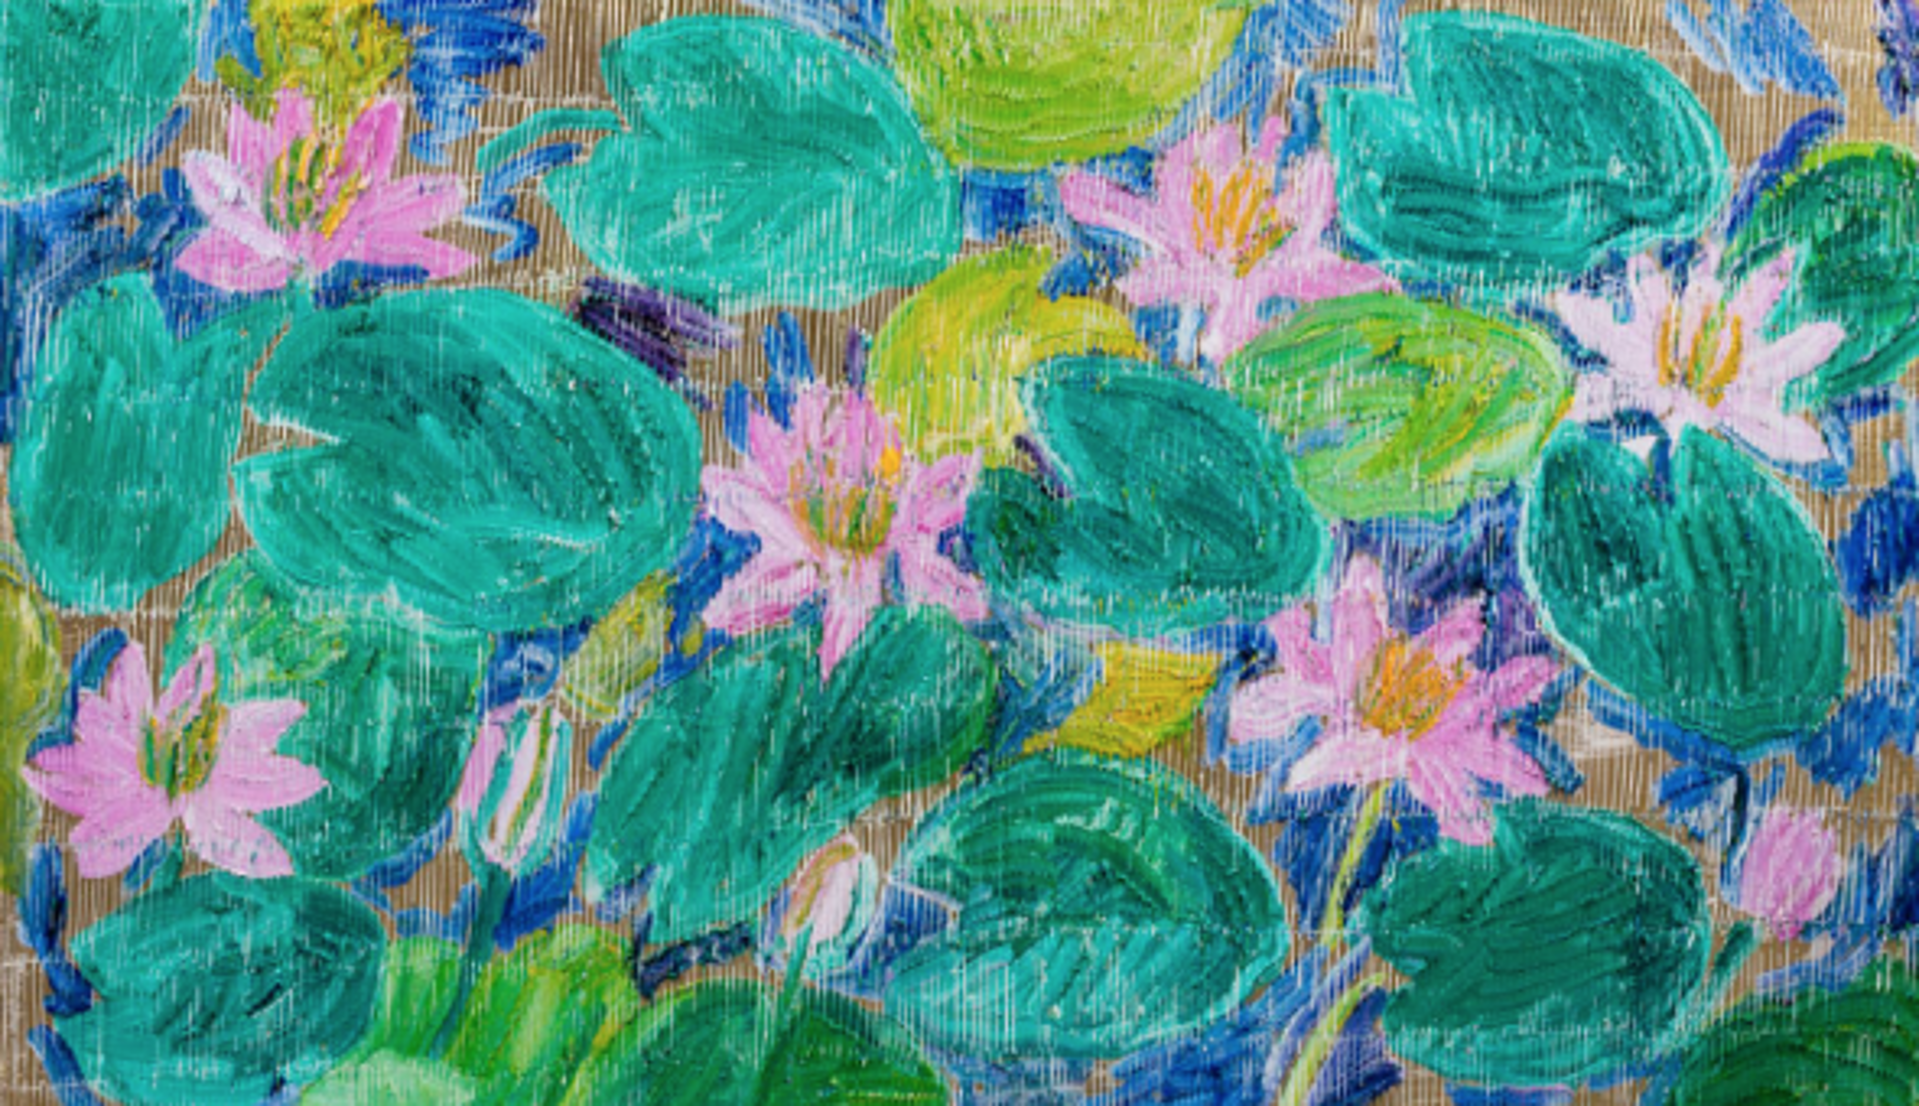 Waterlillies by Hunt Slonem